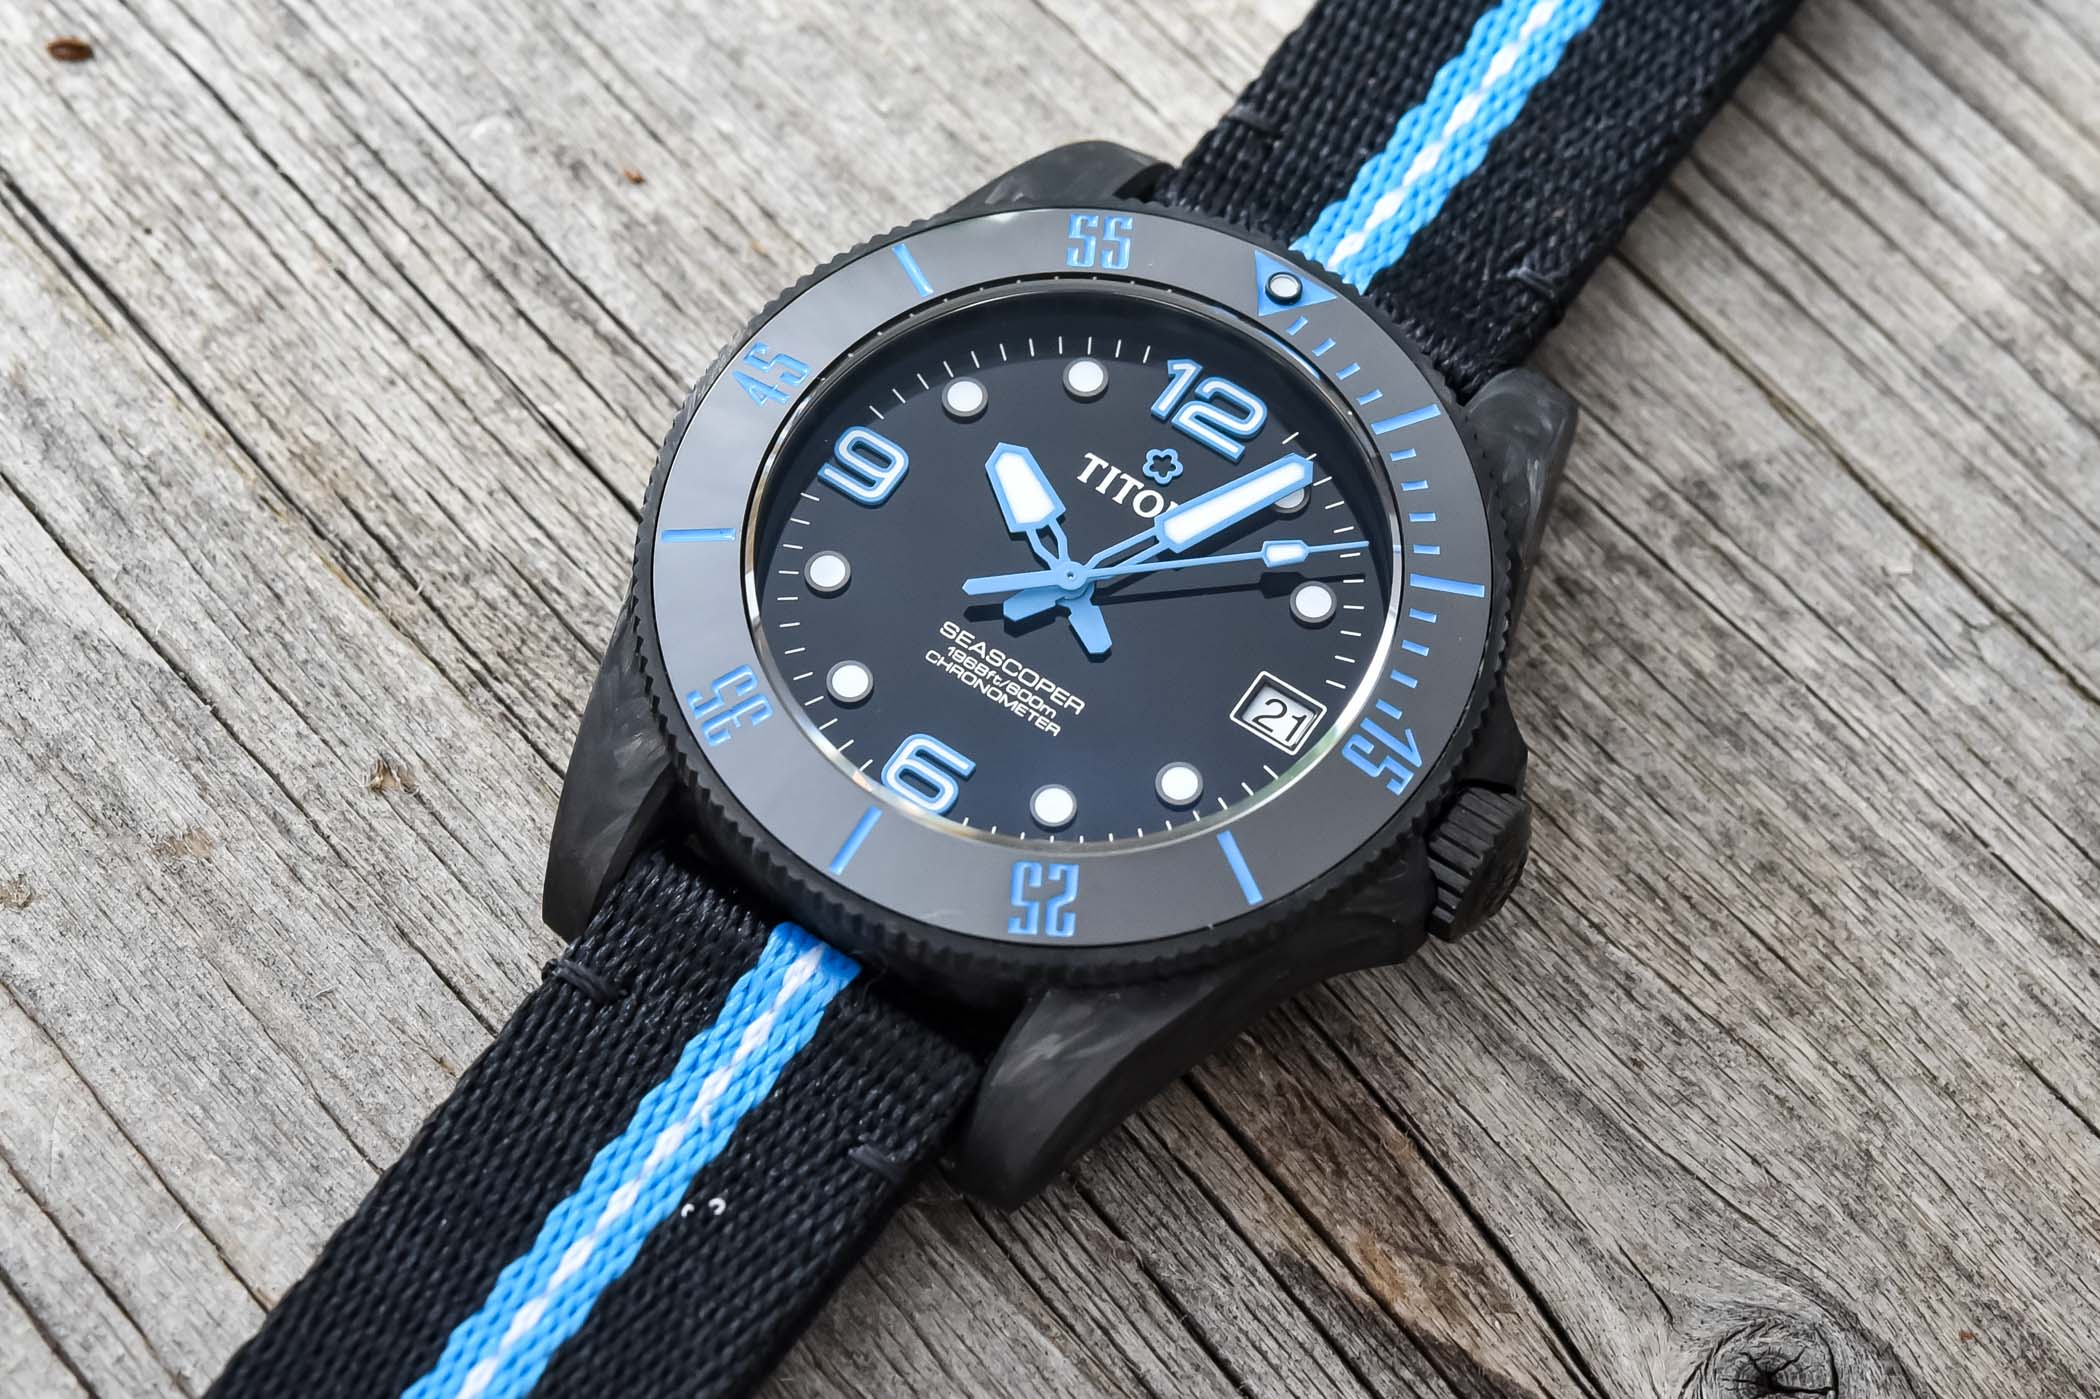 Titoni Seascoper 600 CarboTech Chronometer Dive Watch